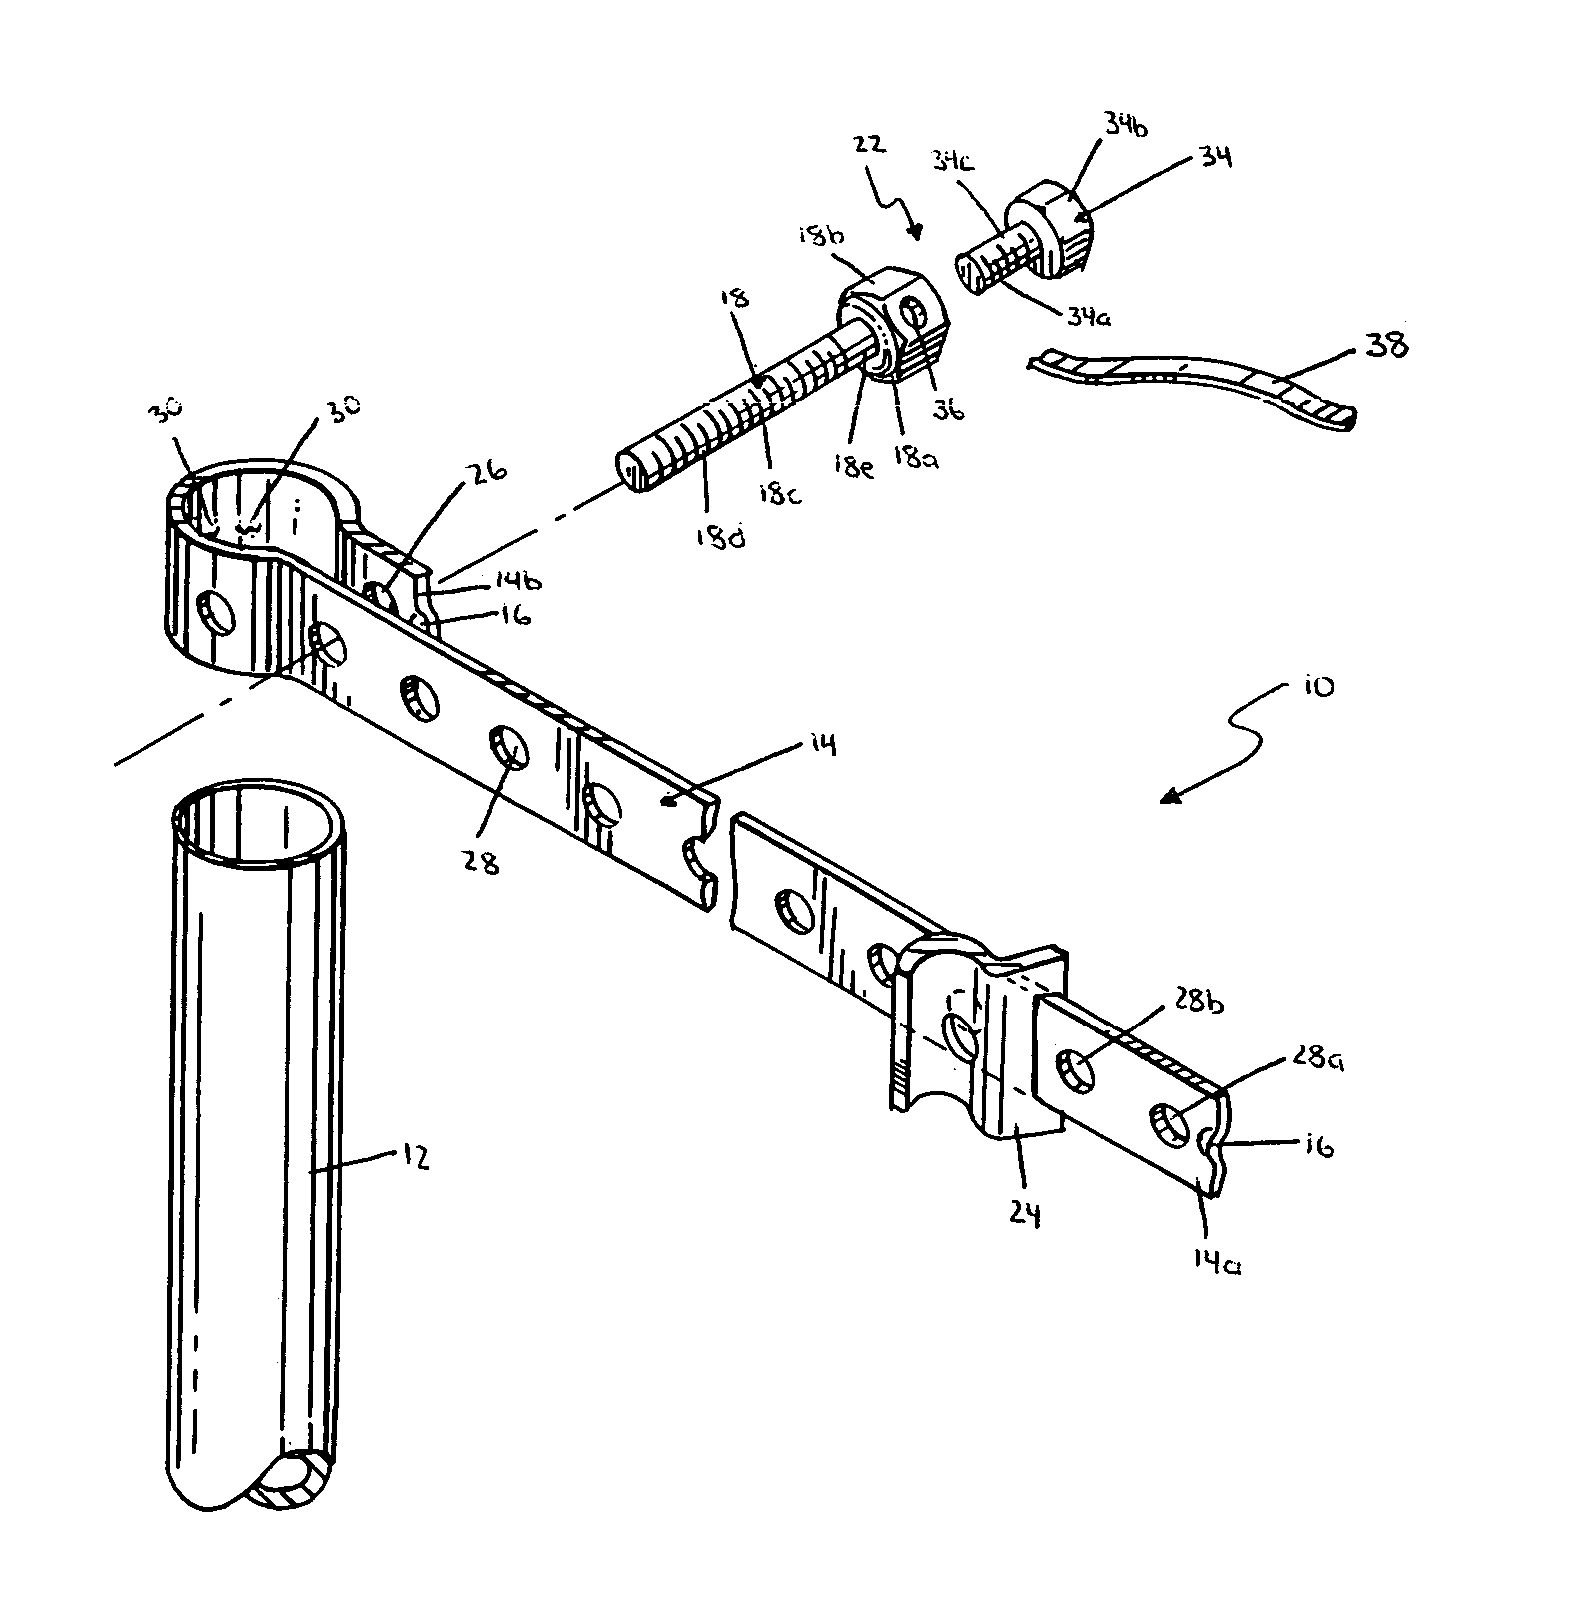 Universal ground strap assembly